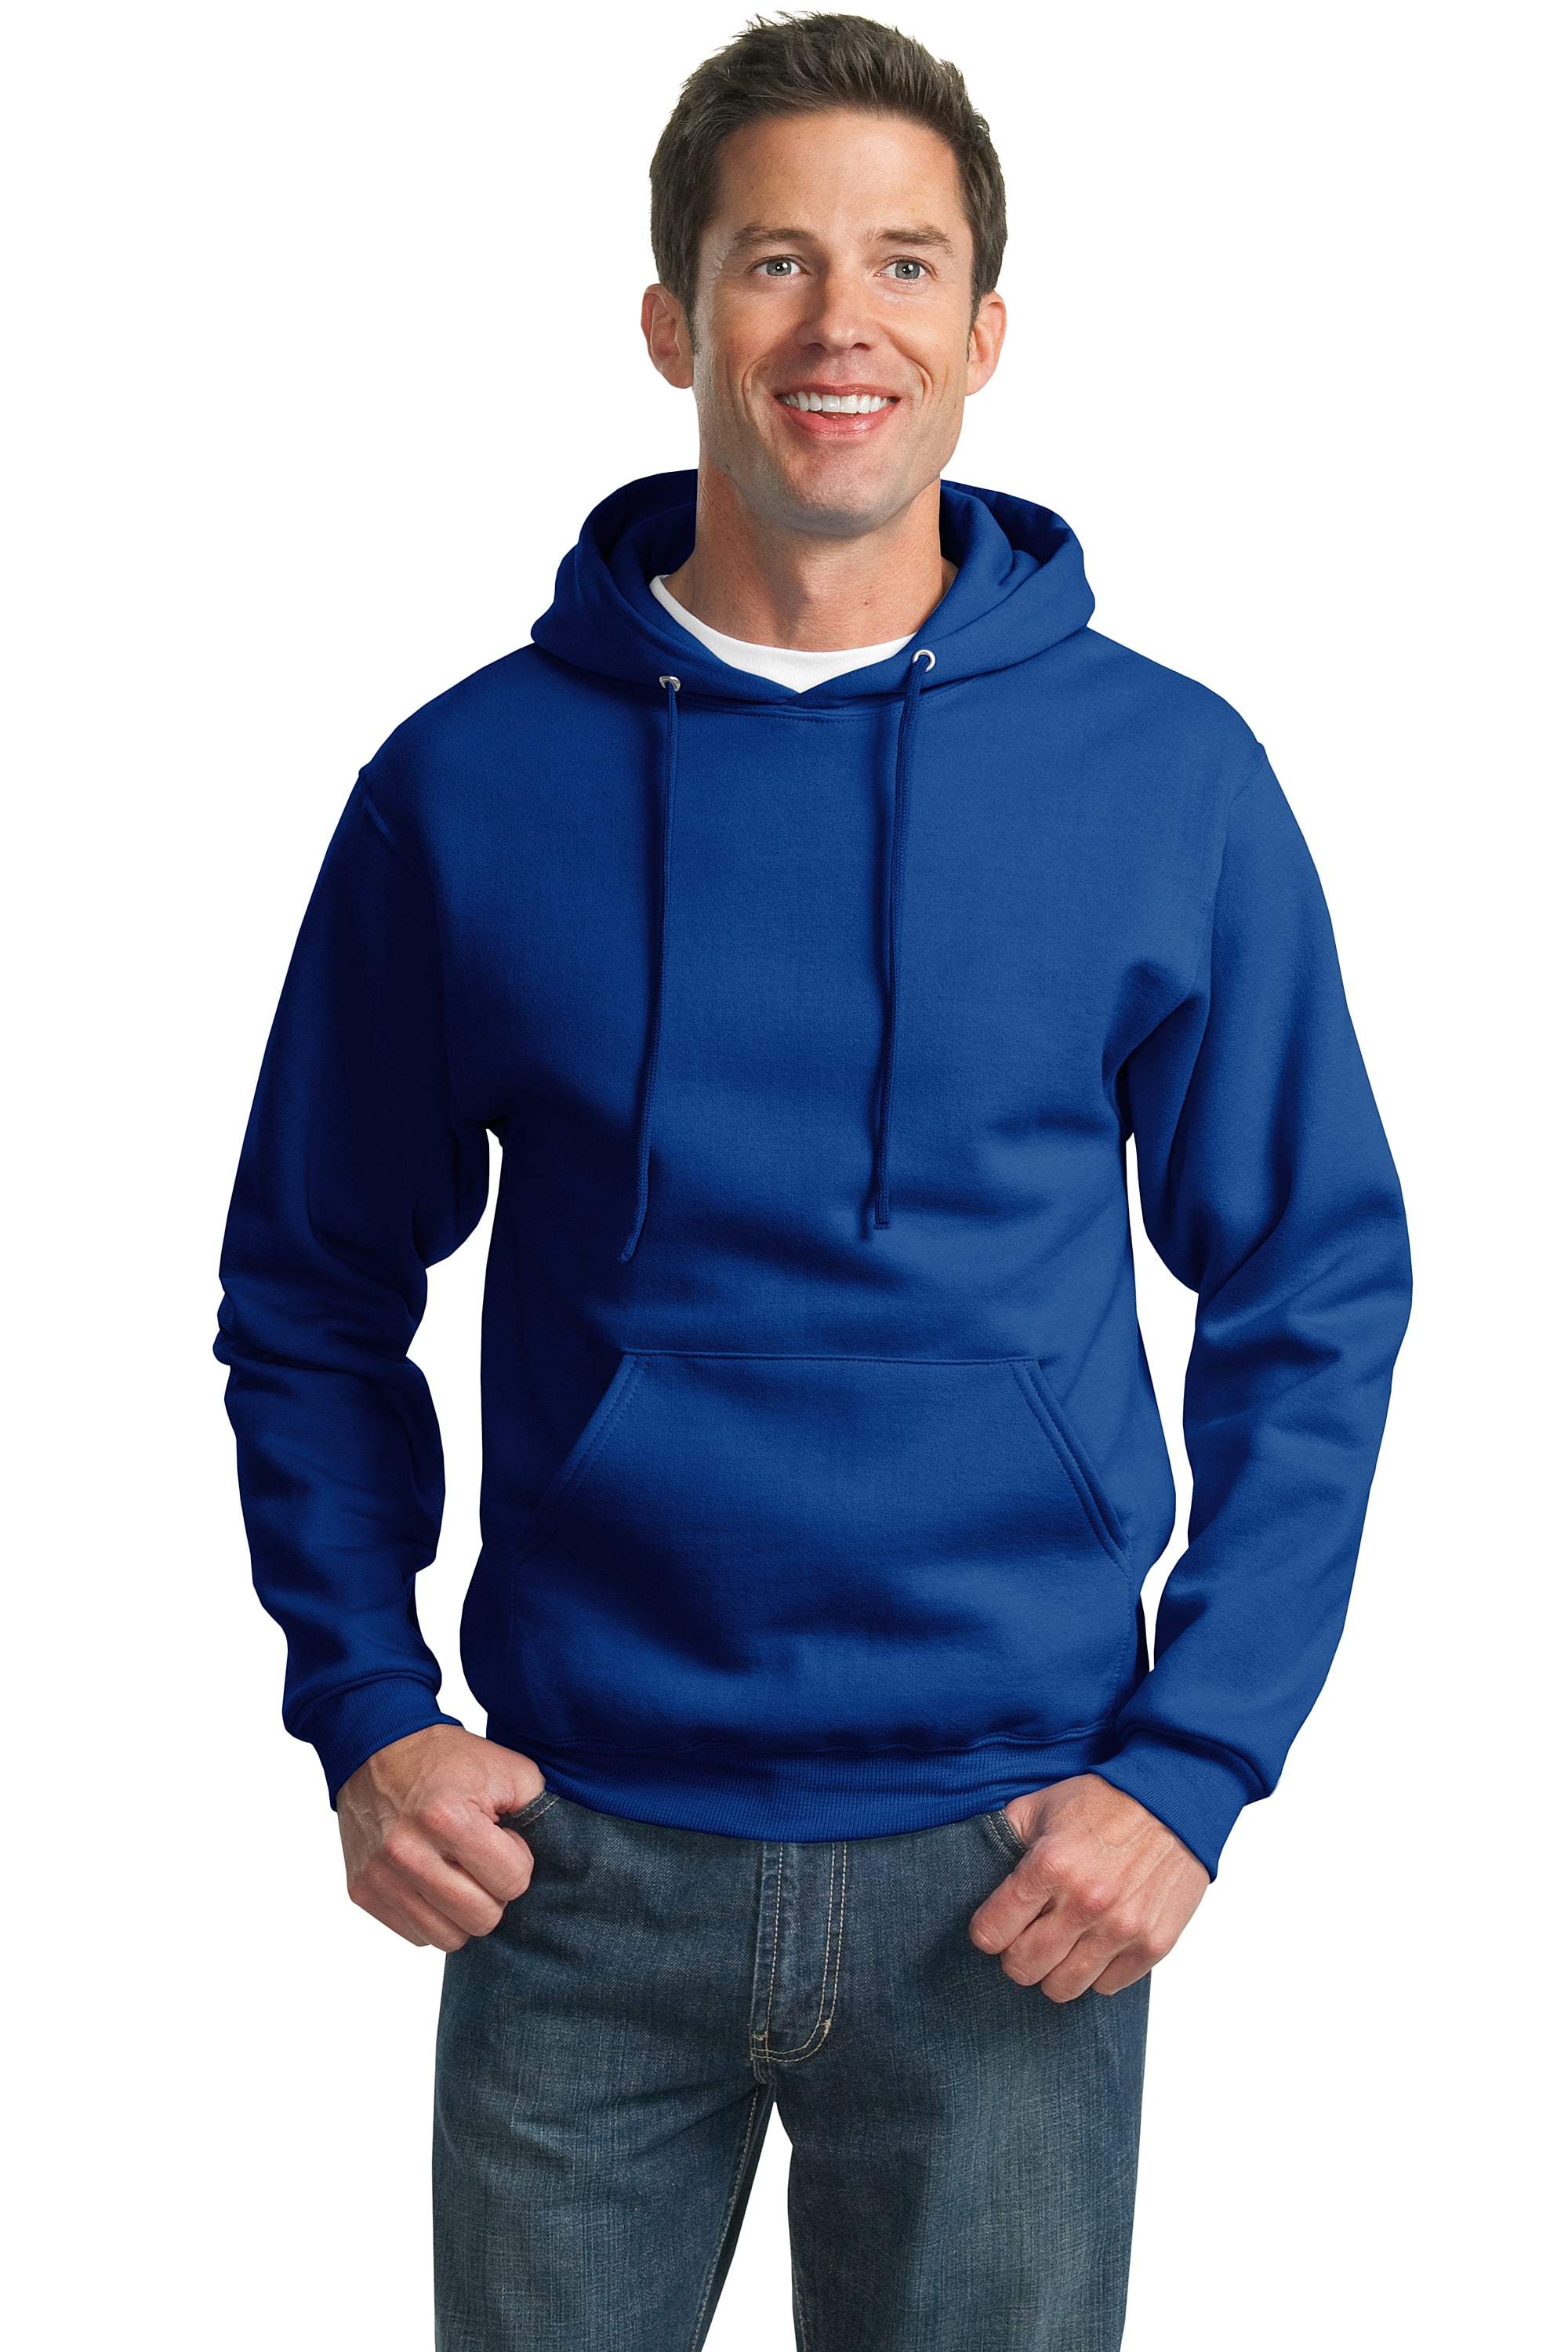 JERZEES SUPER SWEATS NuBlend - Pullover Hooded Sweatshirt. 4997M